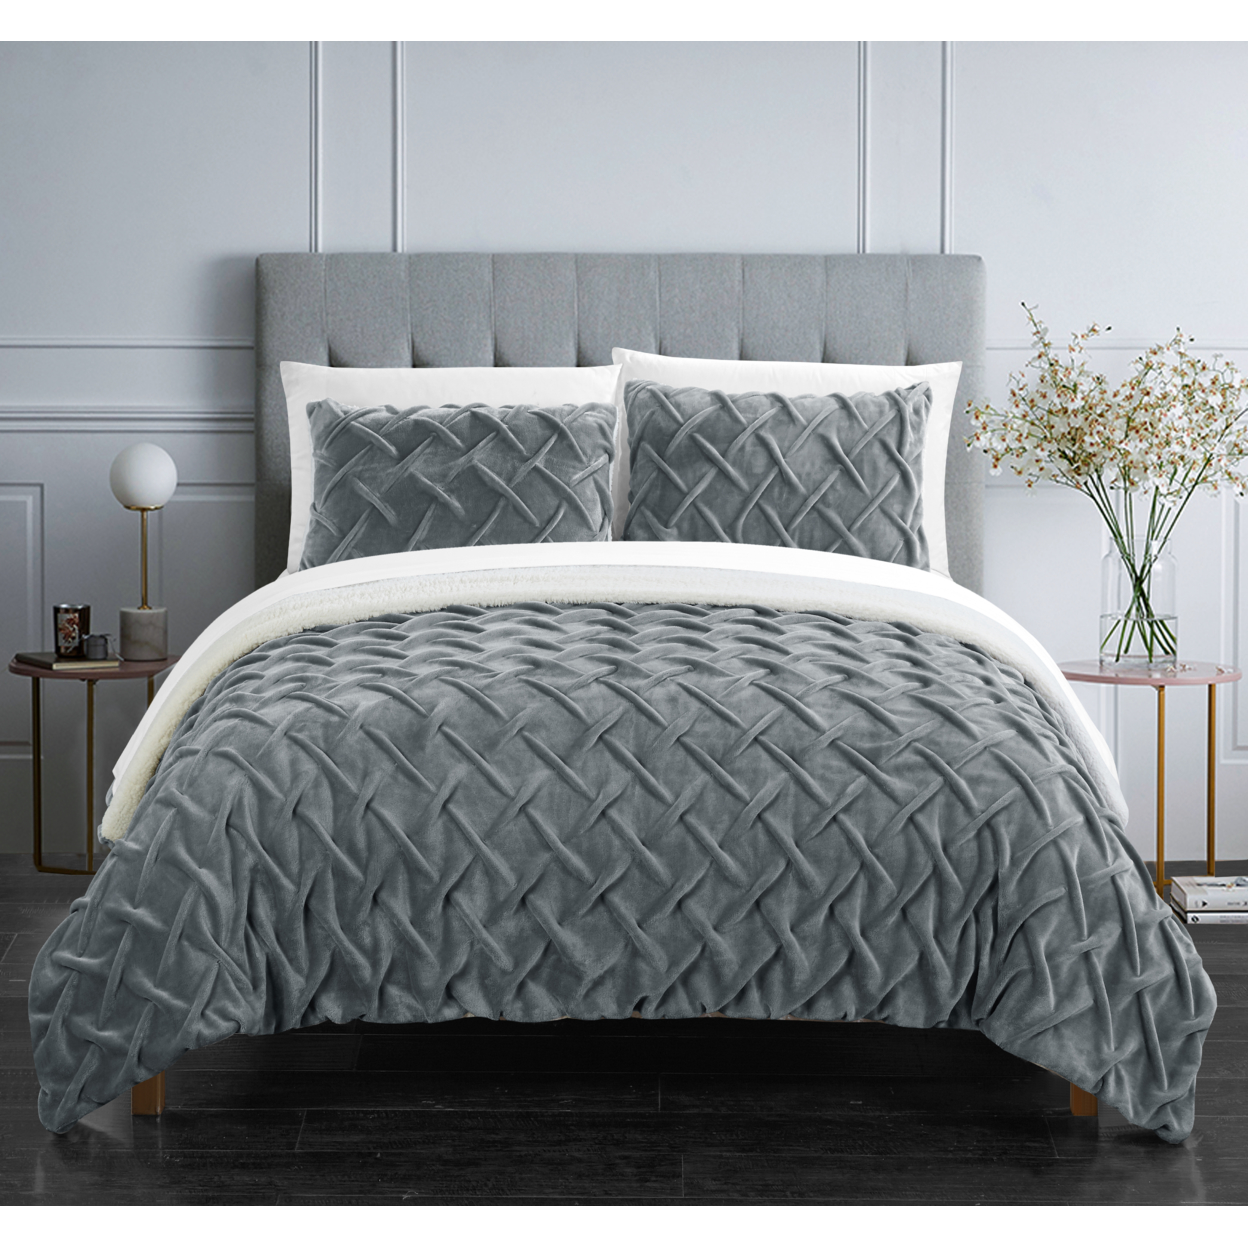 Thirsa 3 Or 2 Piece Comforter Set Ultra Plush Micro Mink Criss Cross Pinch Pleat Sherpa Lined Bedding - Grey, Twin Xl